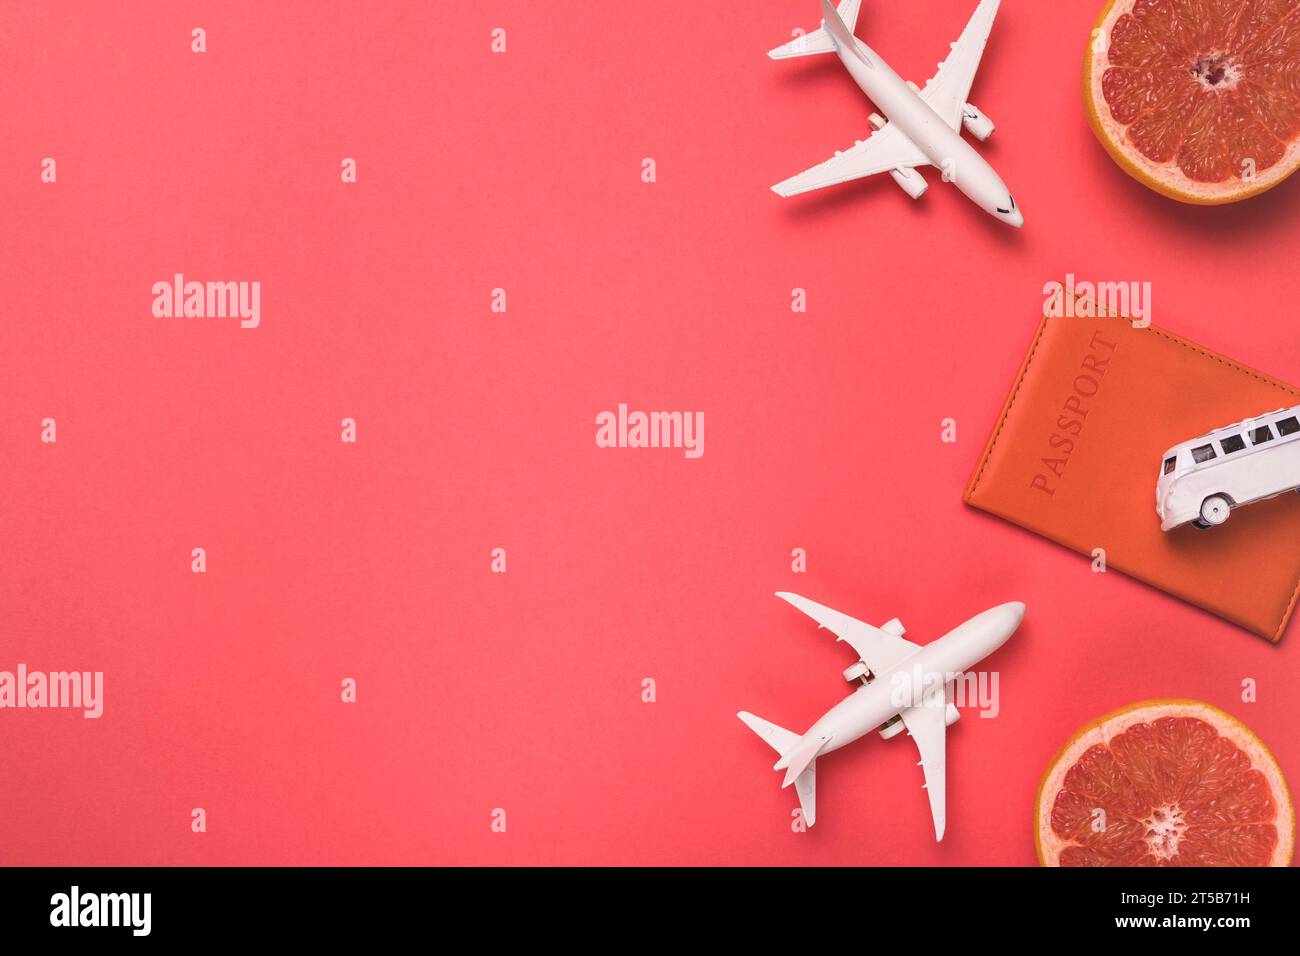 Composition toy airplanes bus passport grapefruit Stock Photo